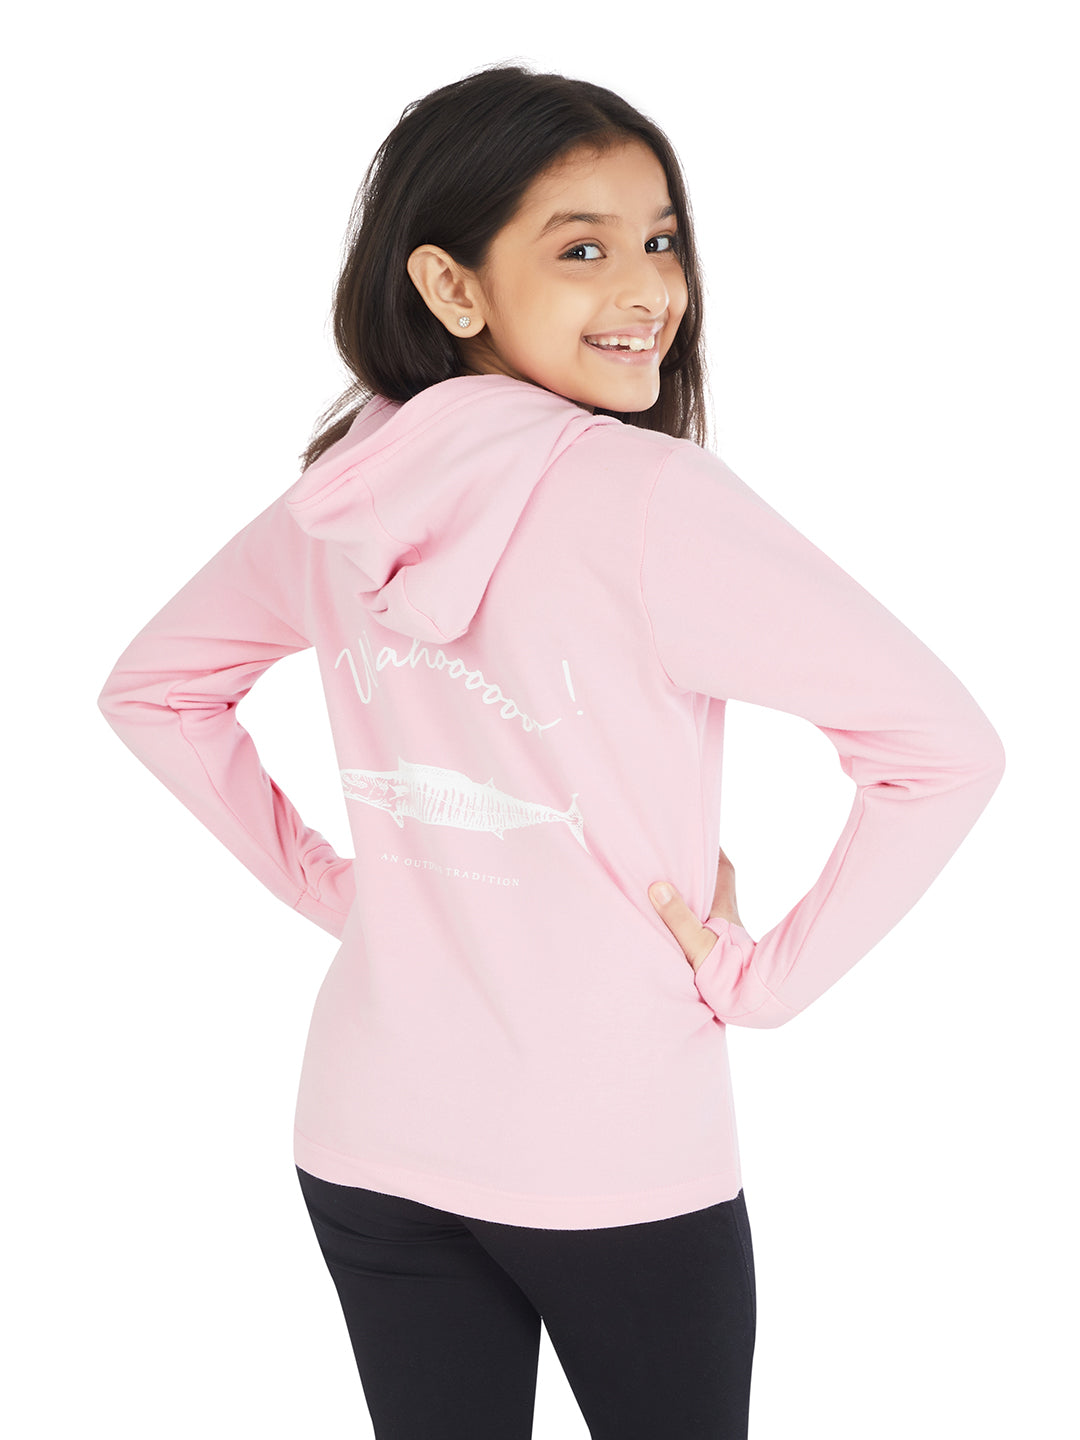 Olele® Girls French Terry Hoodie Sweatshirt - Baby Pink